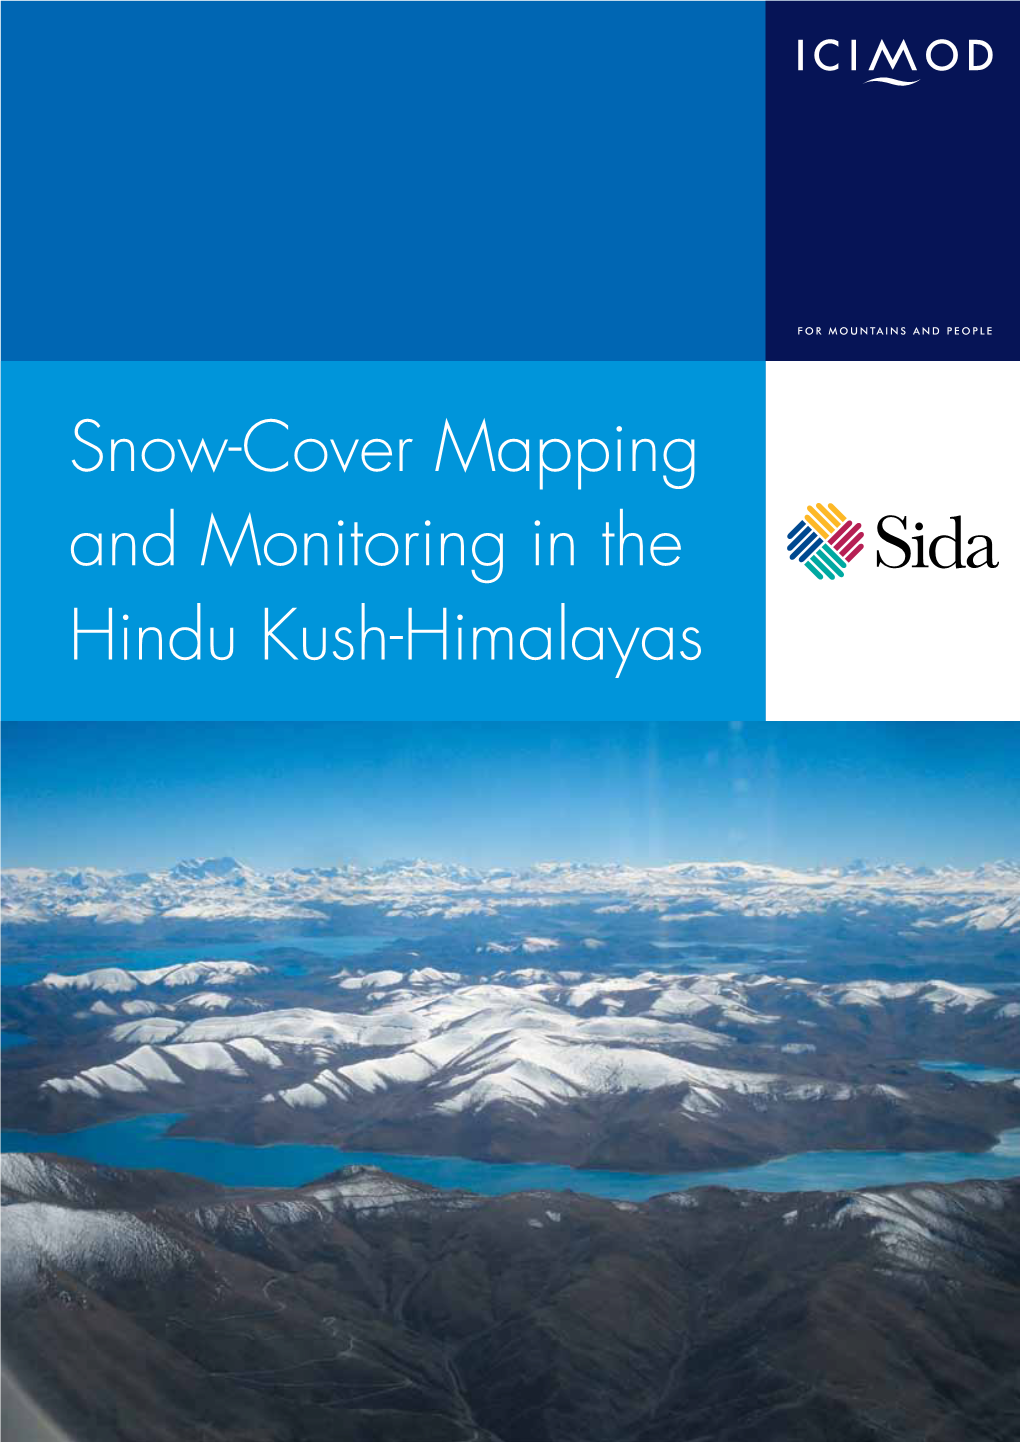 Snow-Cover Mapping and Monitoring in the Hindu Kush-Himalayas